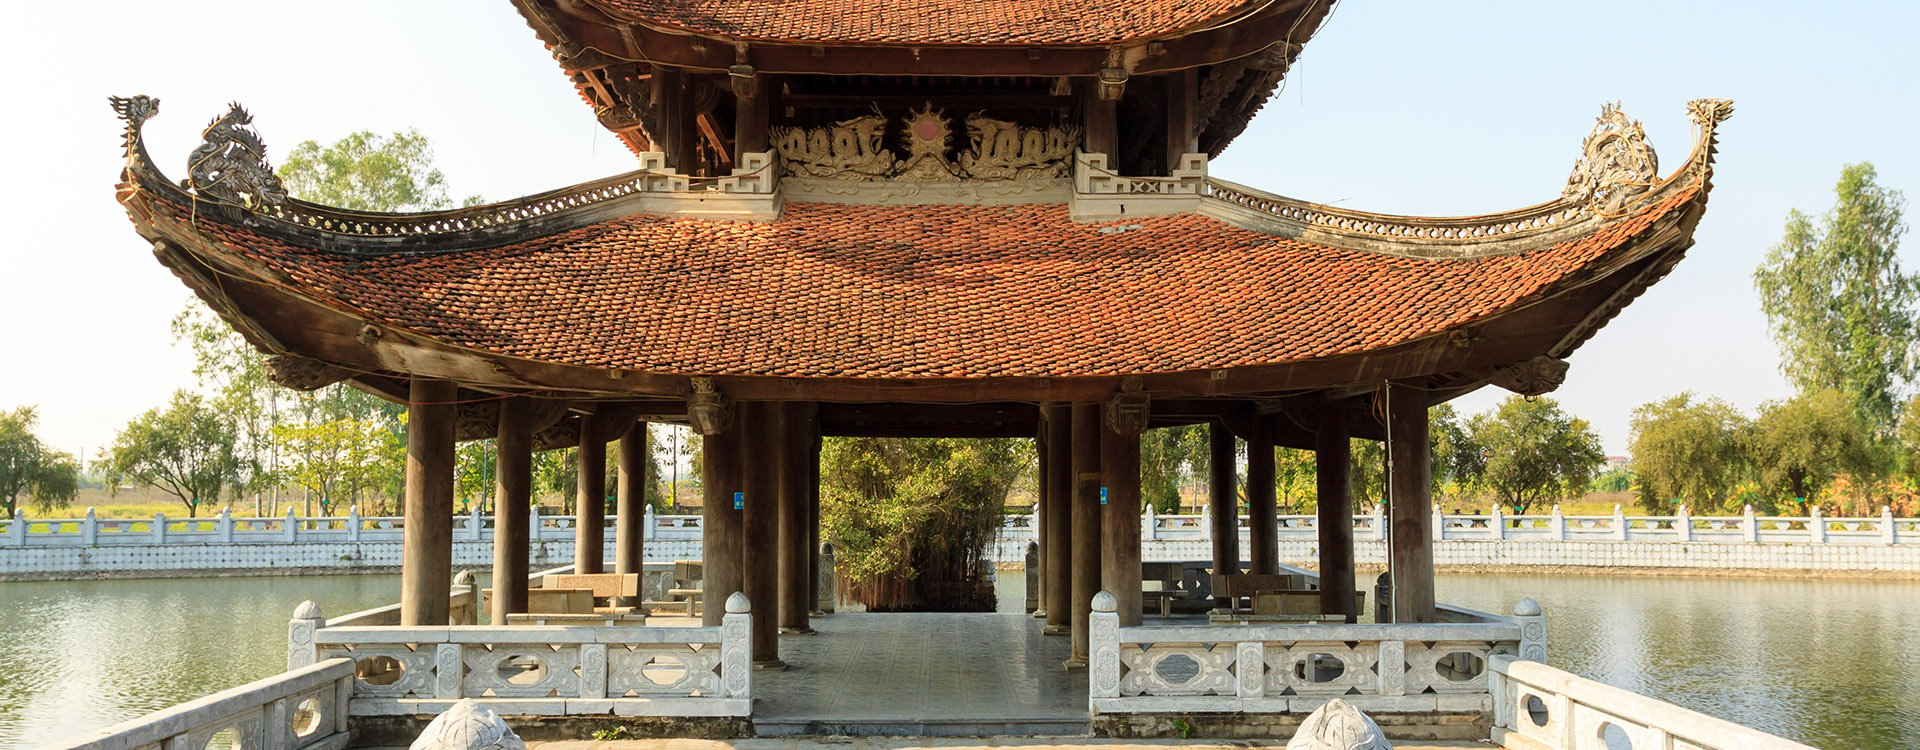 old Vietnam temple pavilion over pond at Hanoi, Vietnam